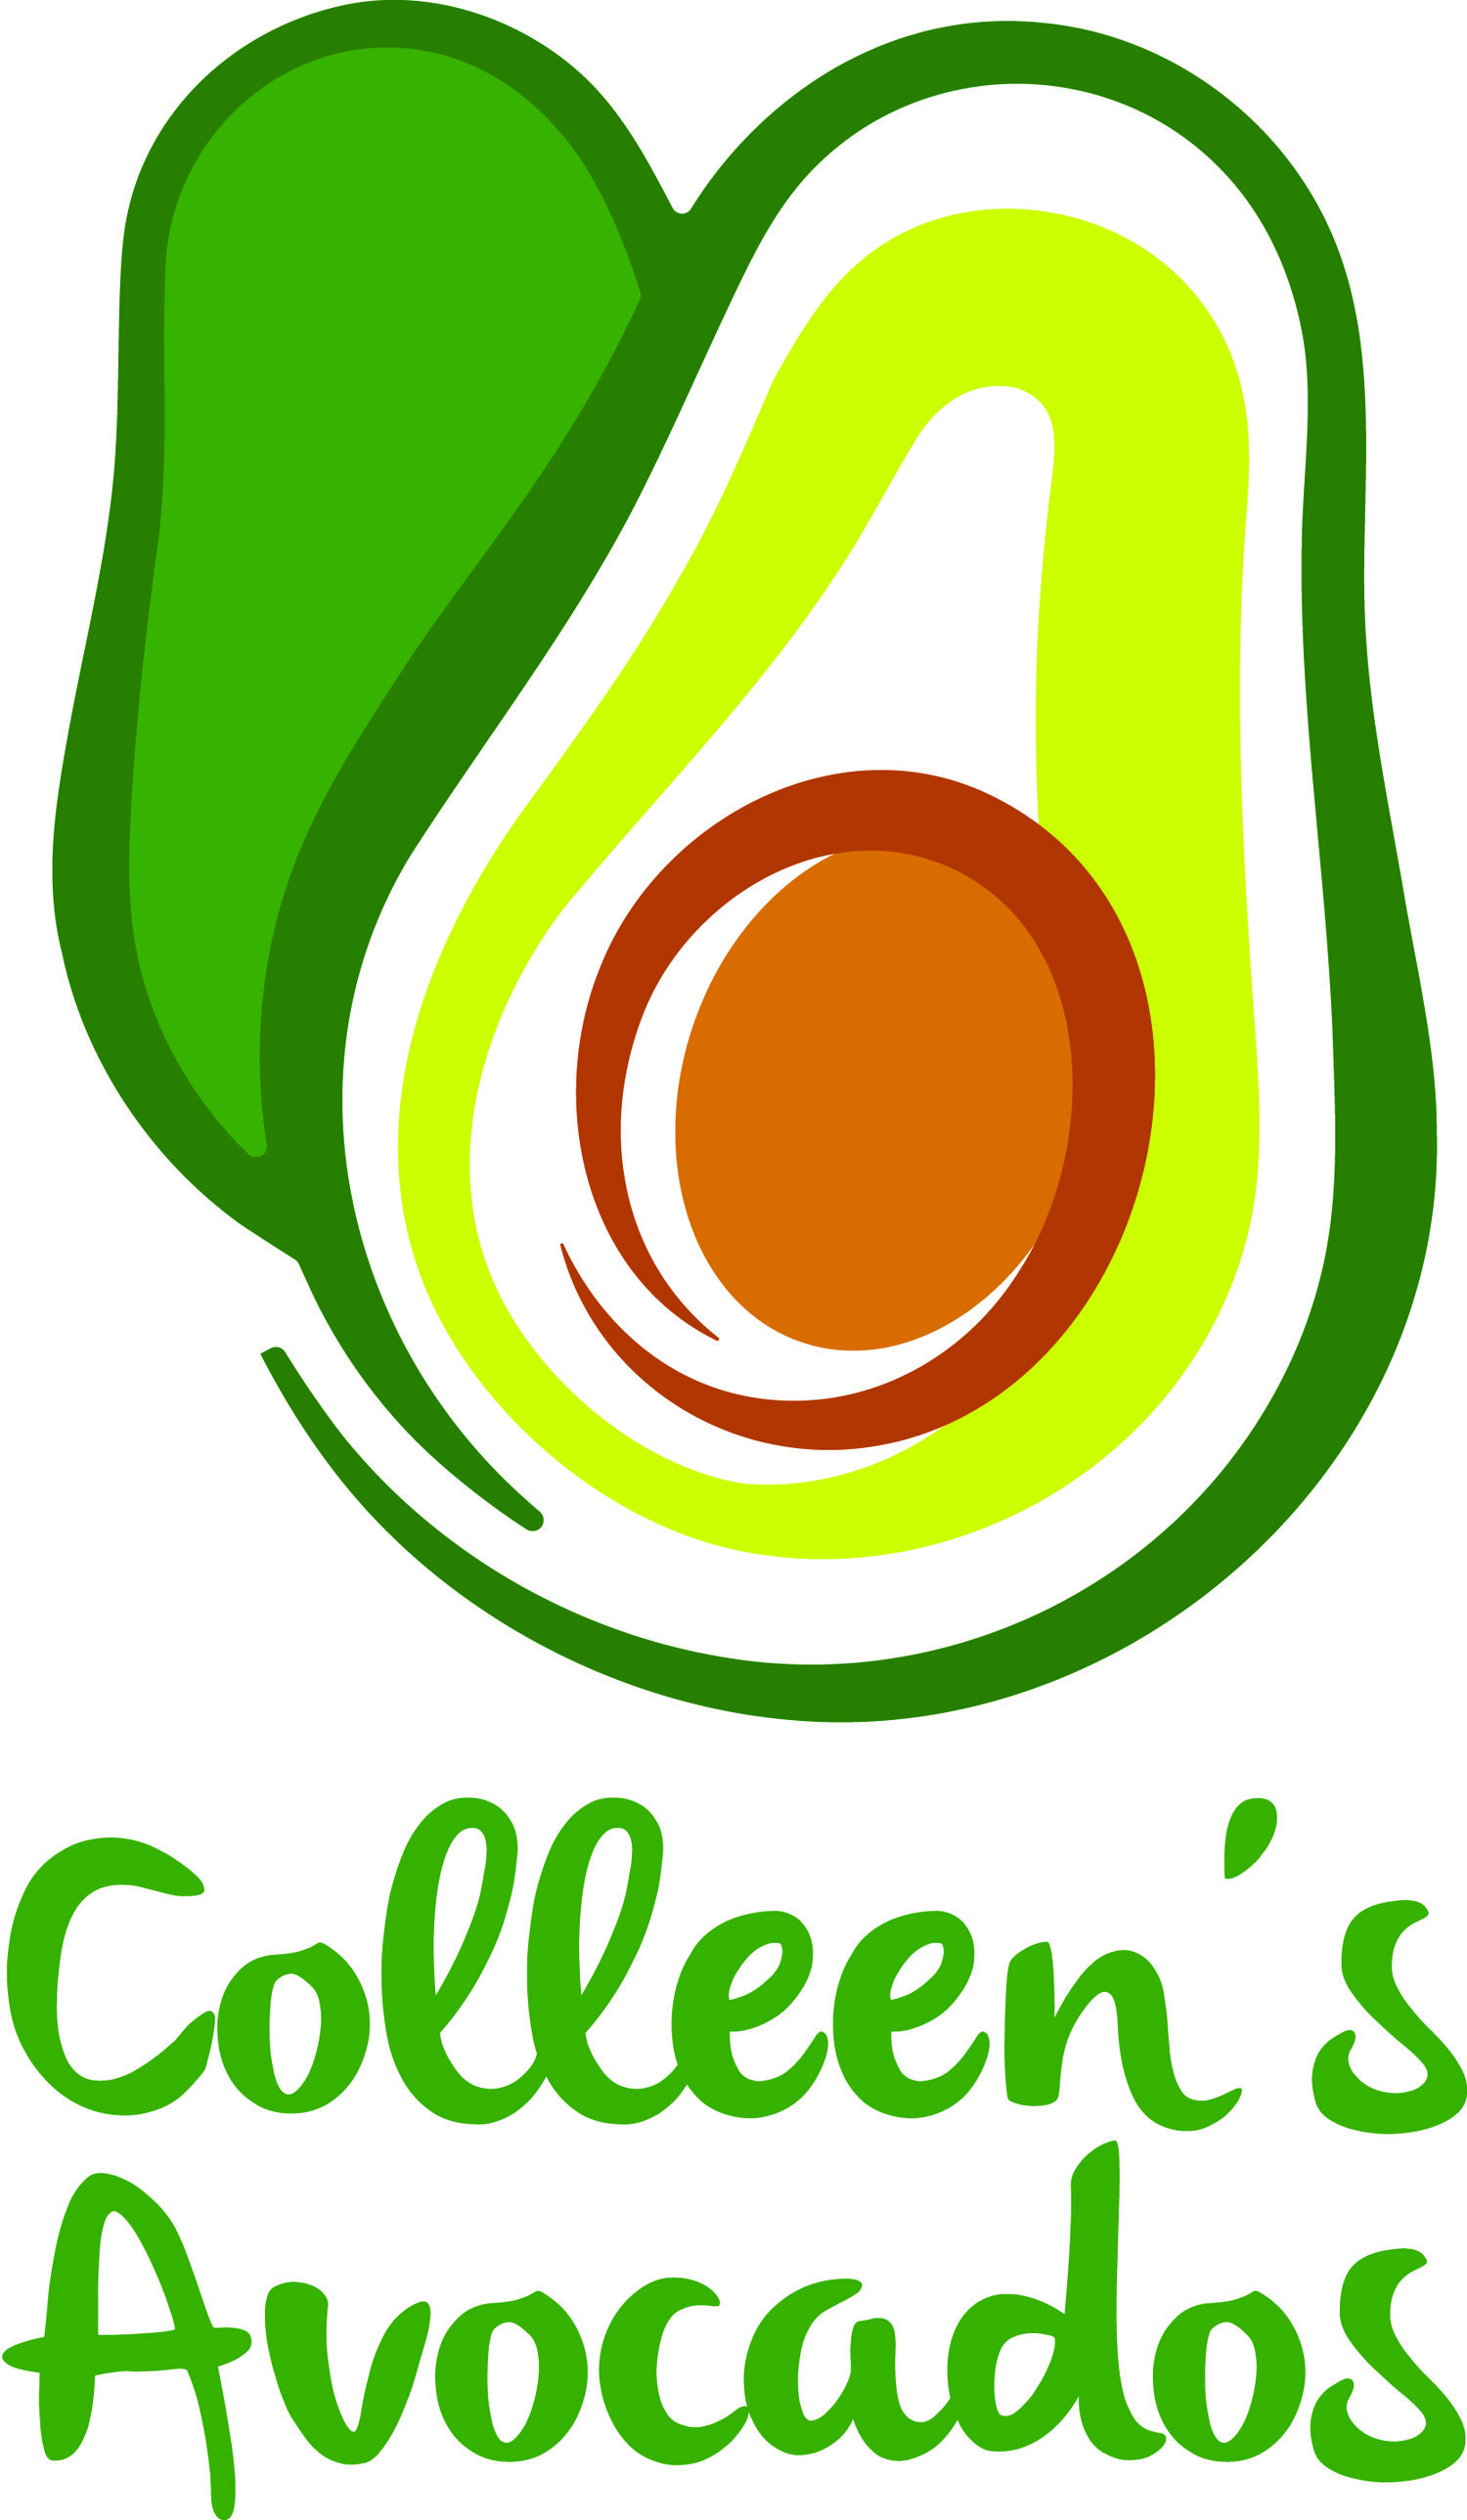 Colleen's Avocados